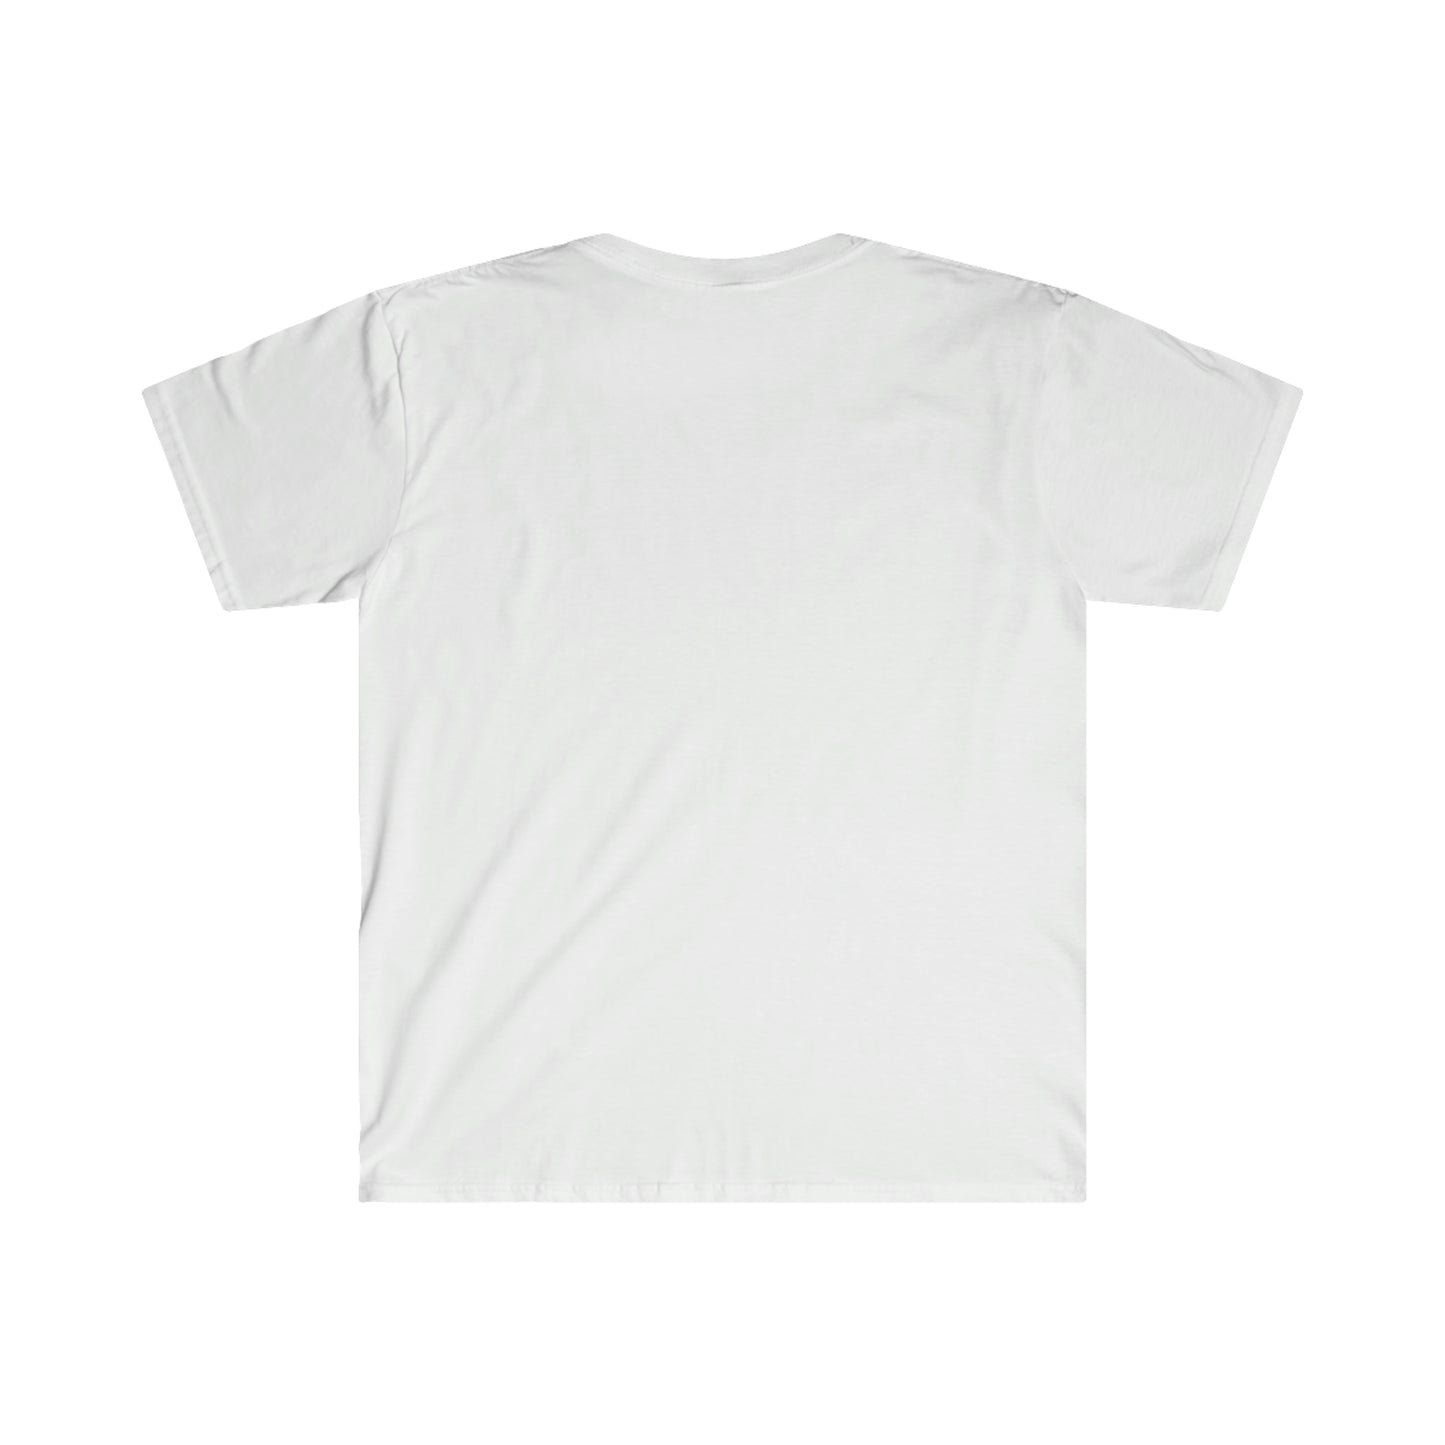 "If It's Not TMI, It's Small Talk" Unisex Softstyle T-Shirt